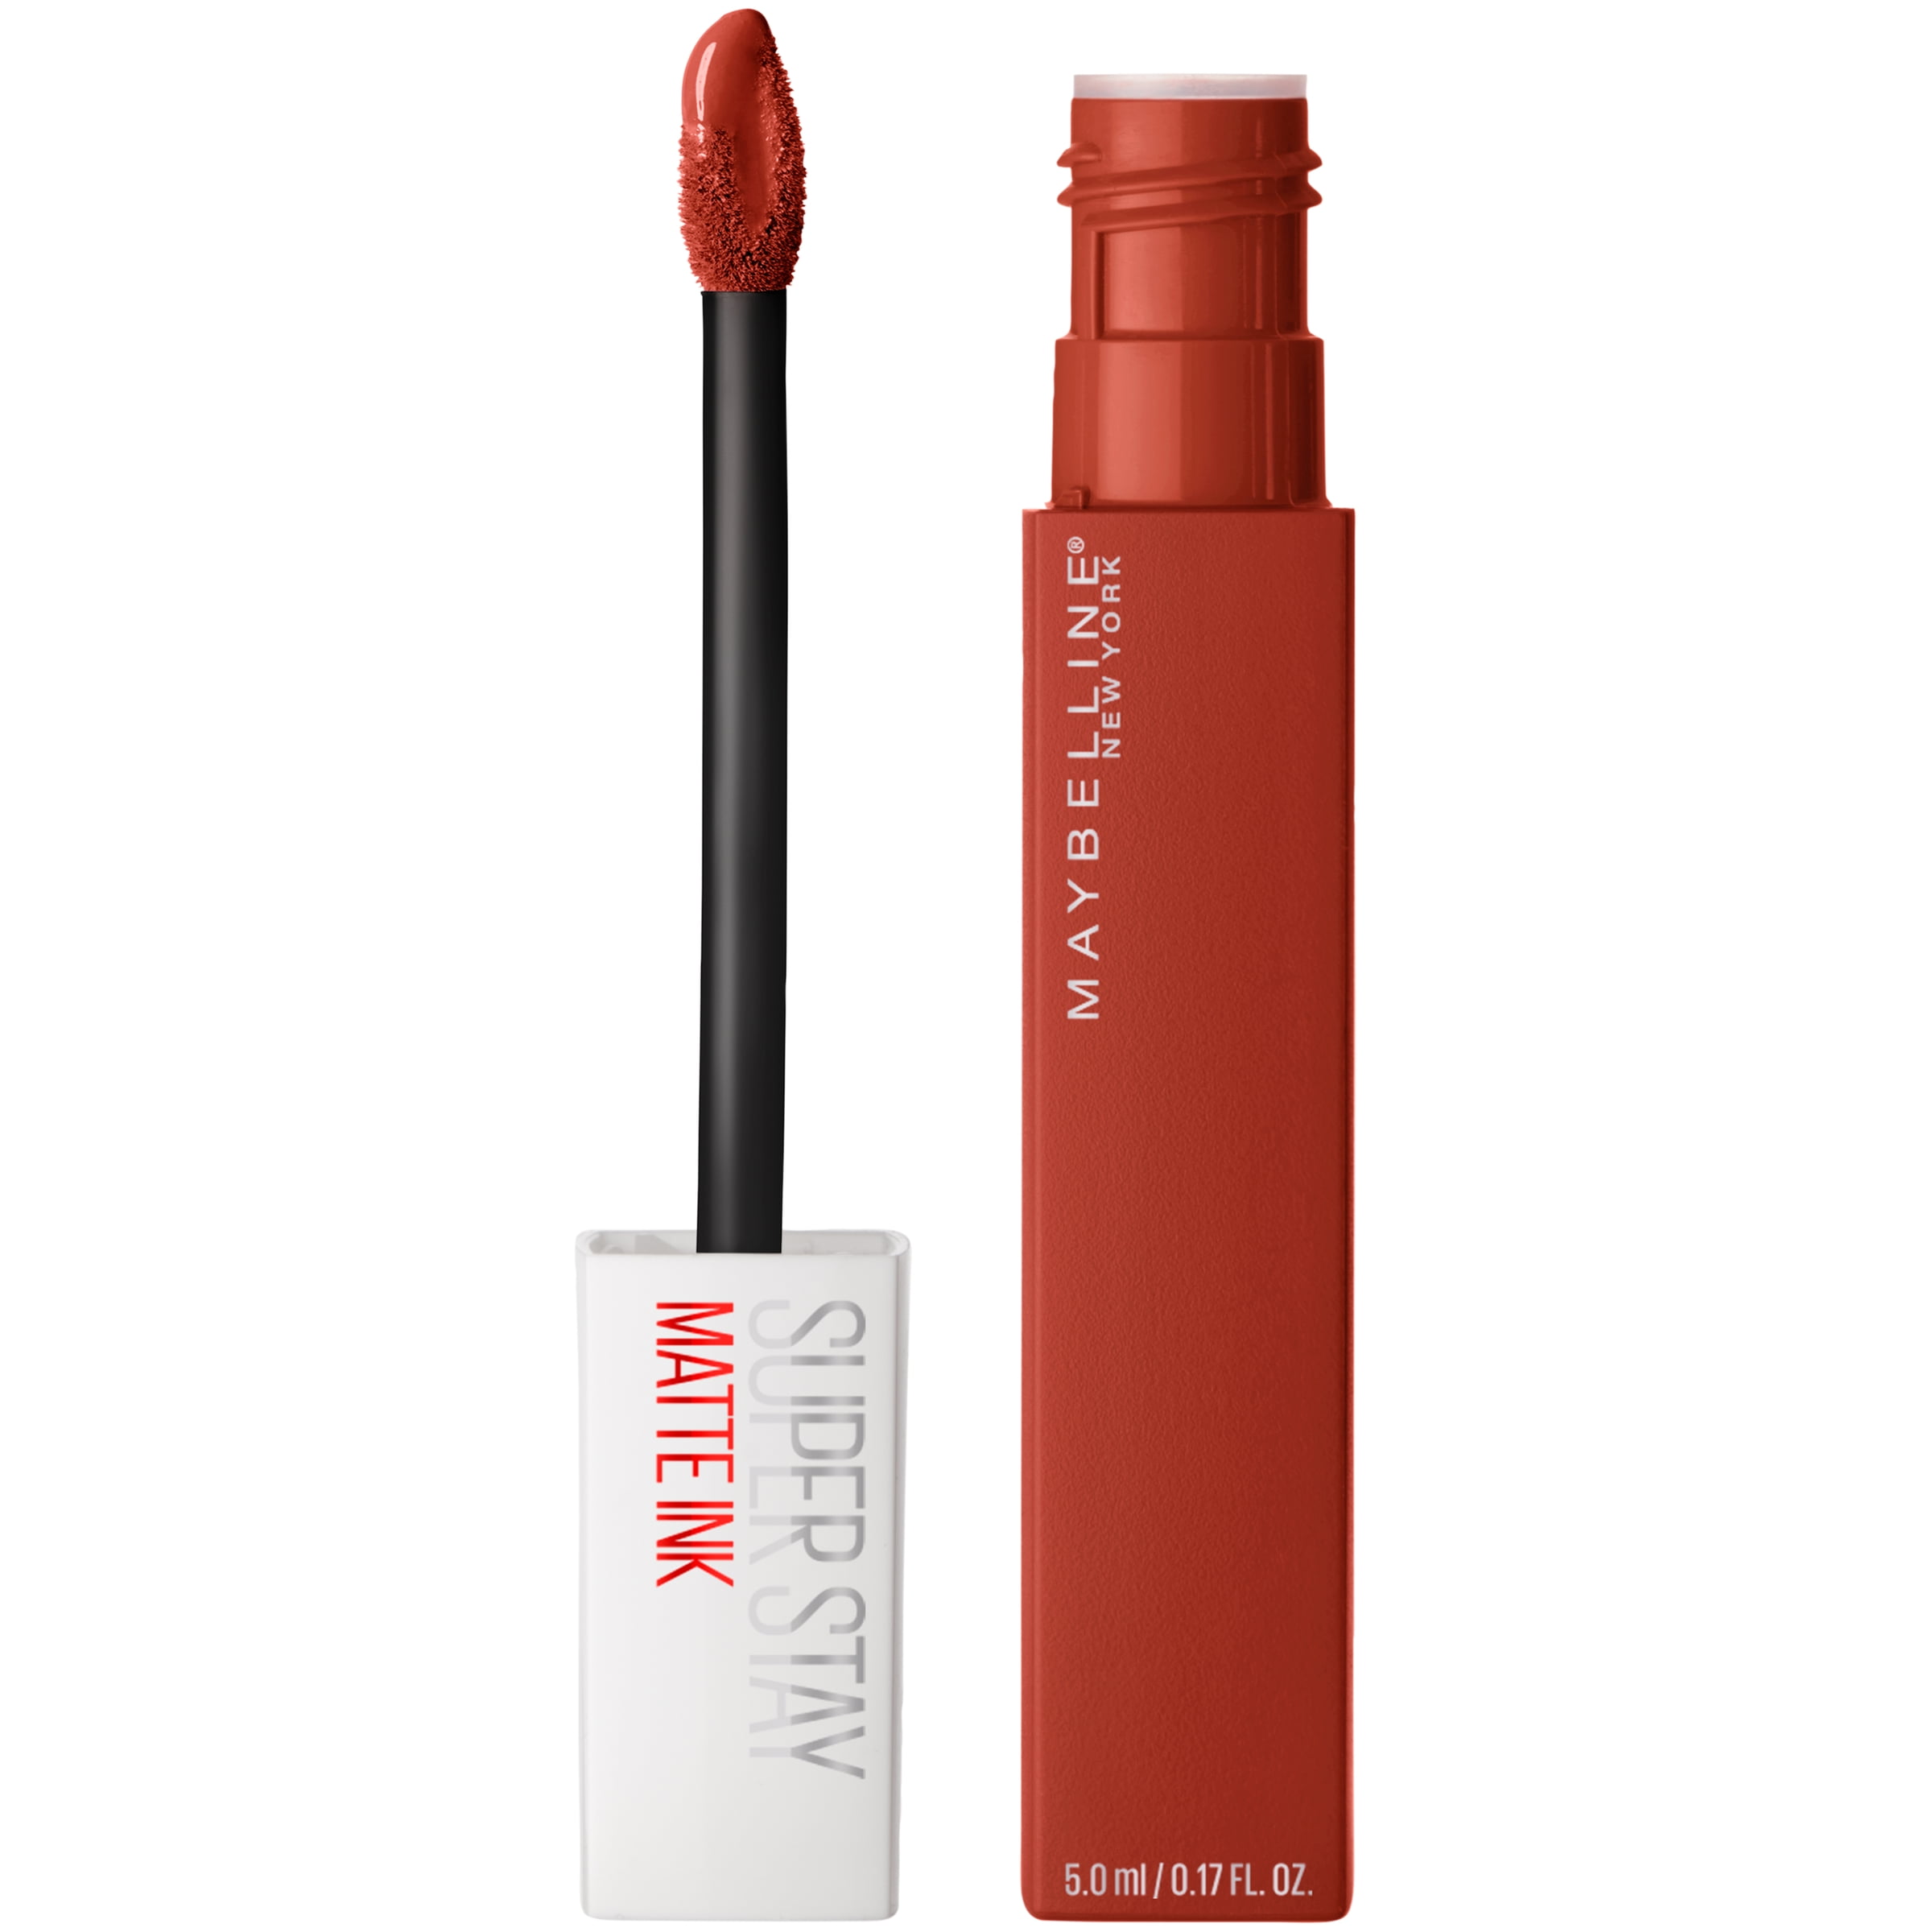 Maybelline Super Stay Matte Ink City Edition Liquid Lipstick Makeup, Ground-Breaker, 0.17 fl. oz.